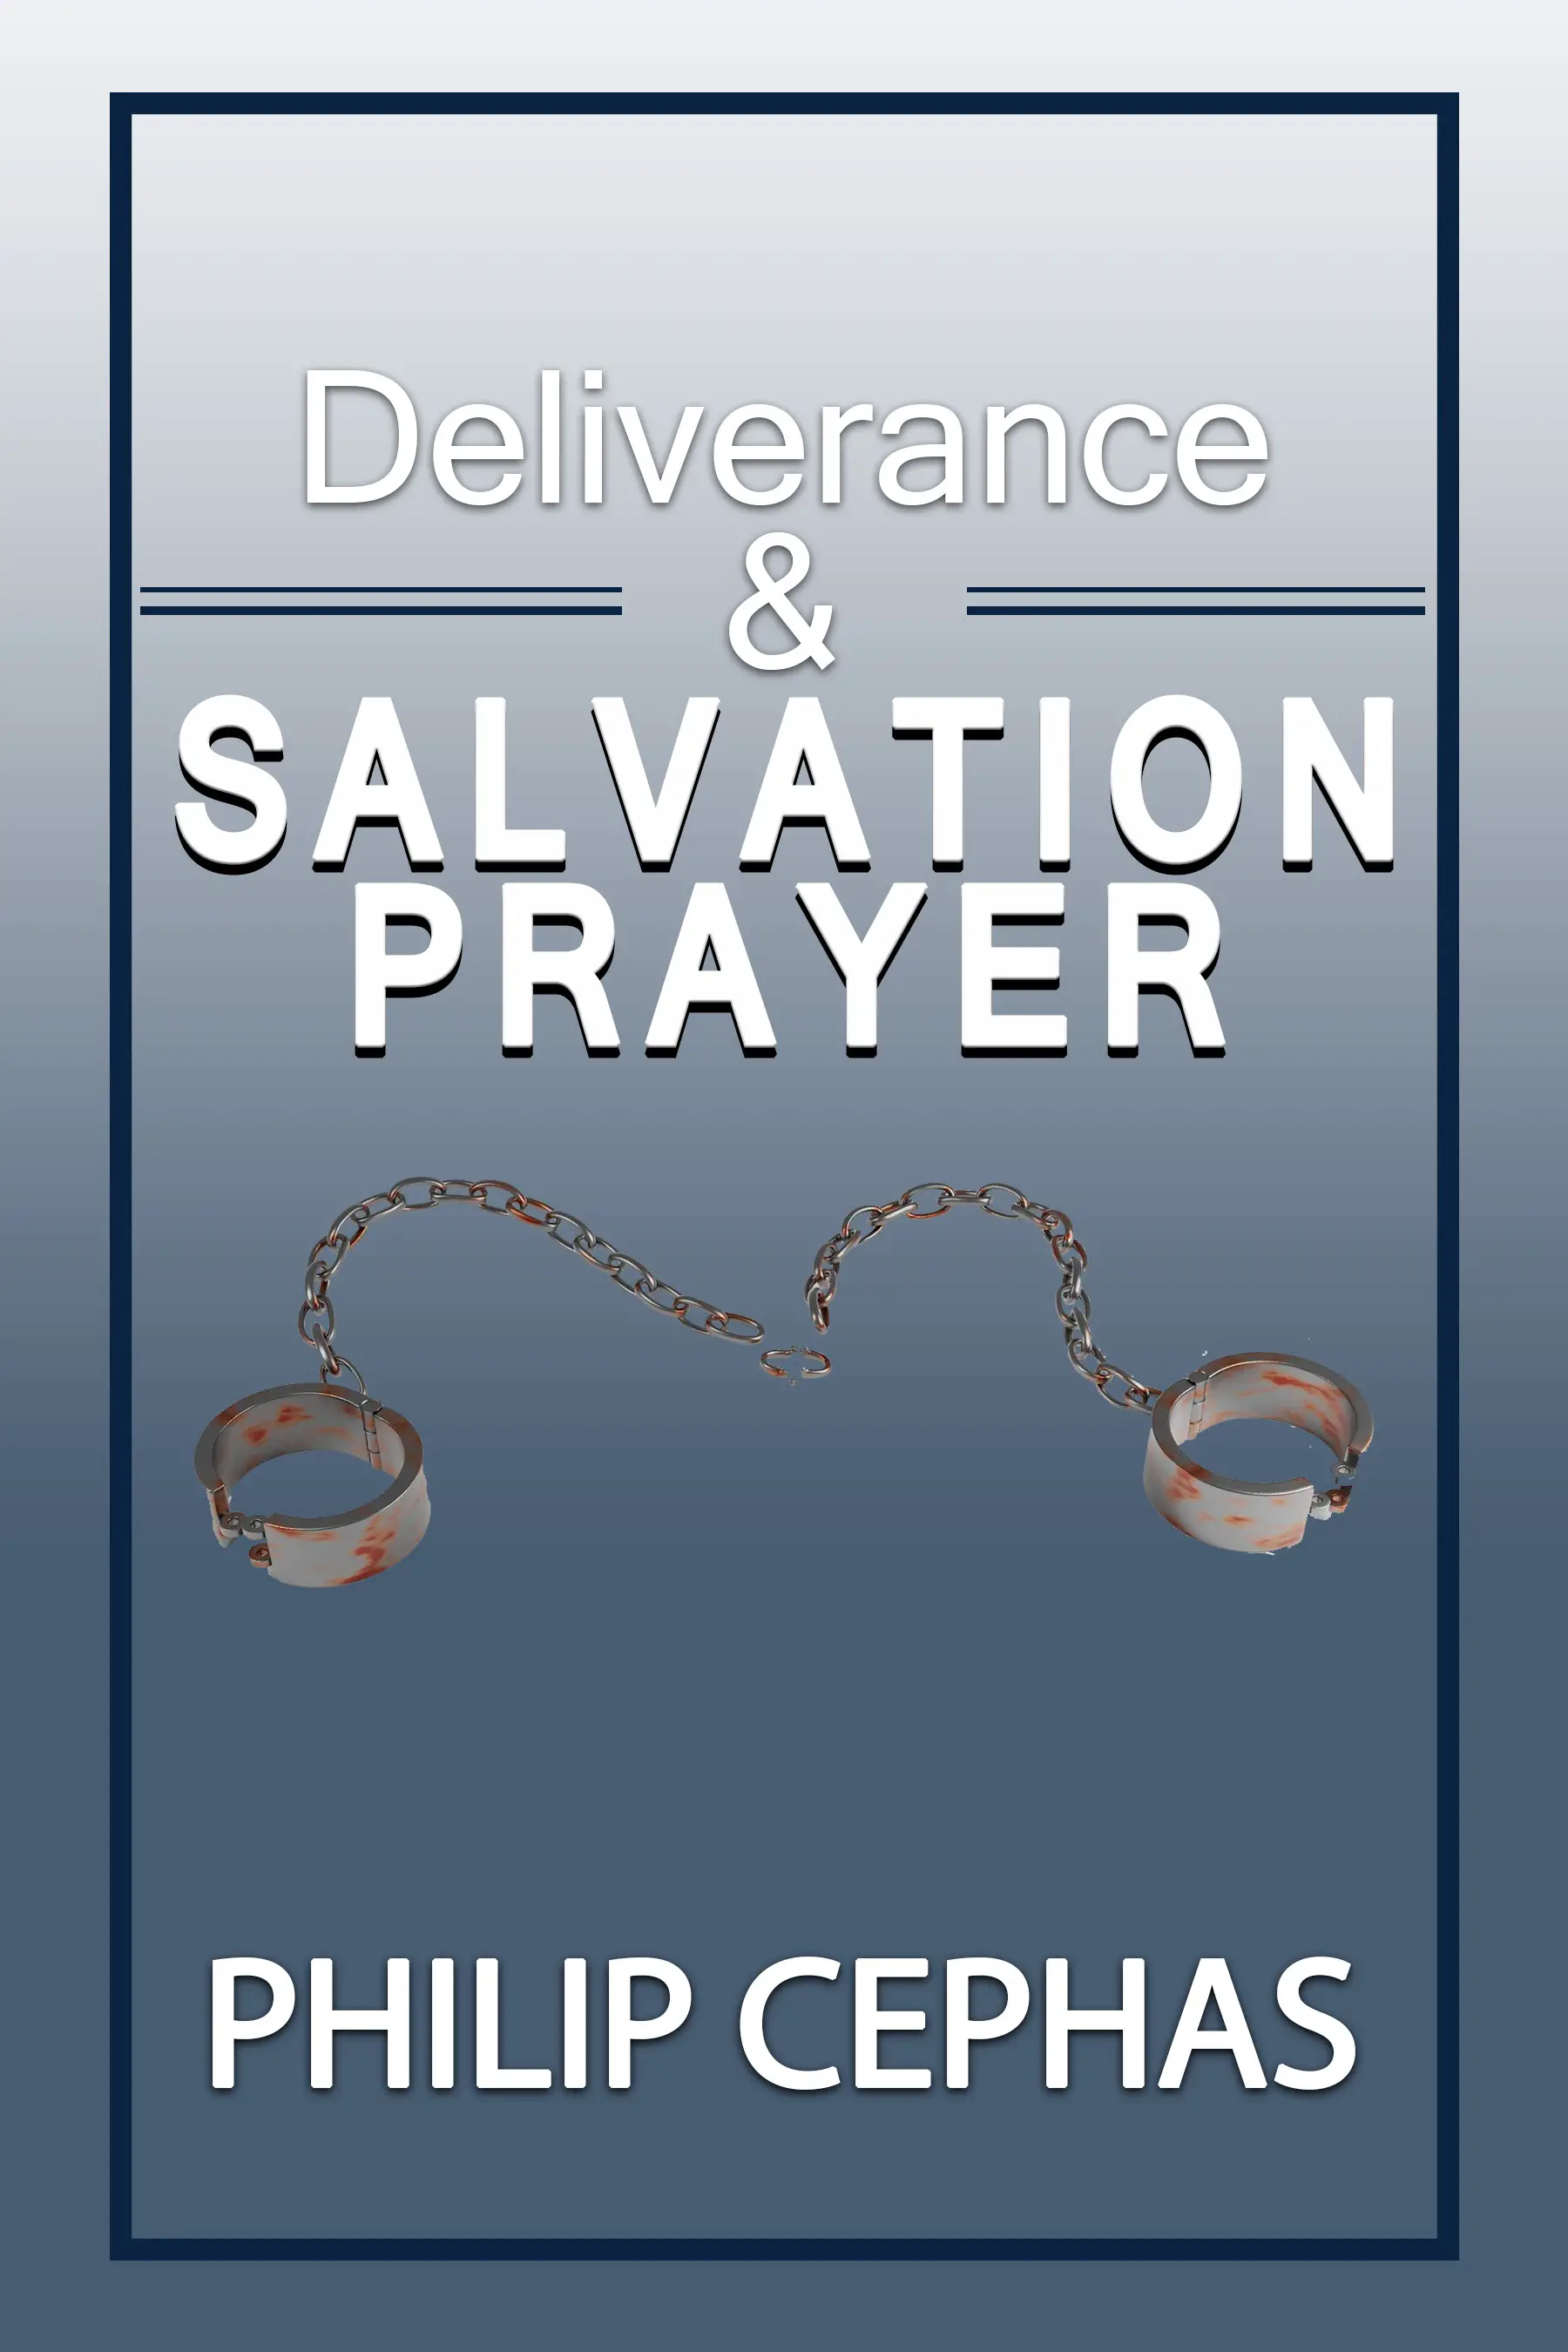 DOWNLOAD PDF: Deliverance & Salvation Prayer by Apostle Philip Cephas 18